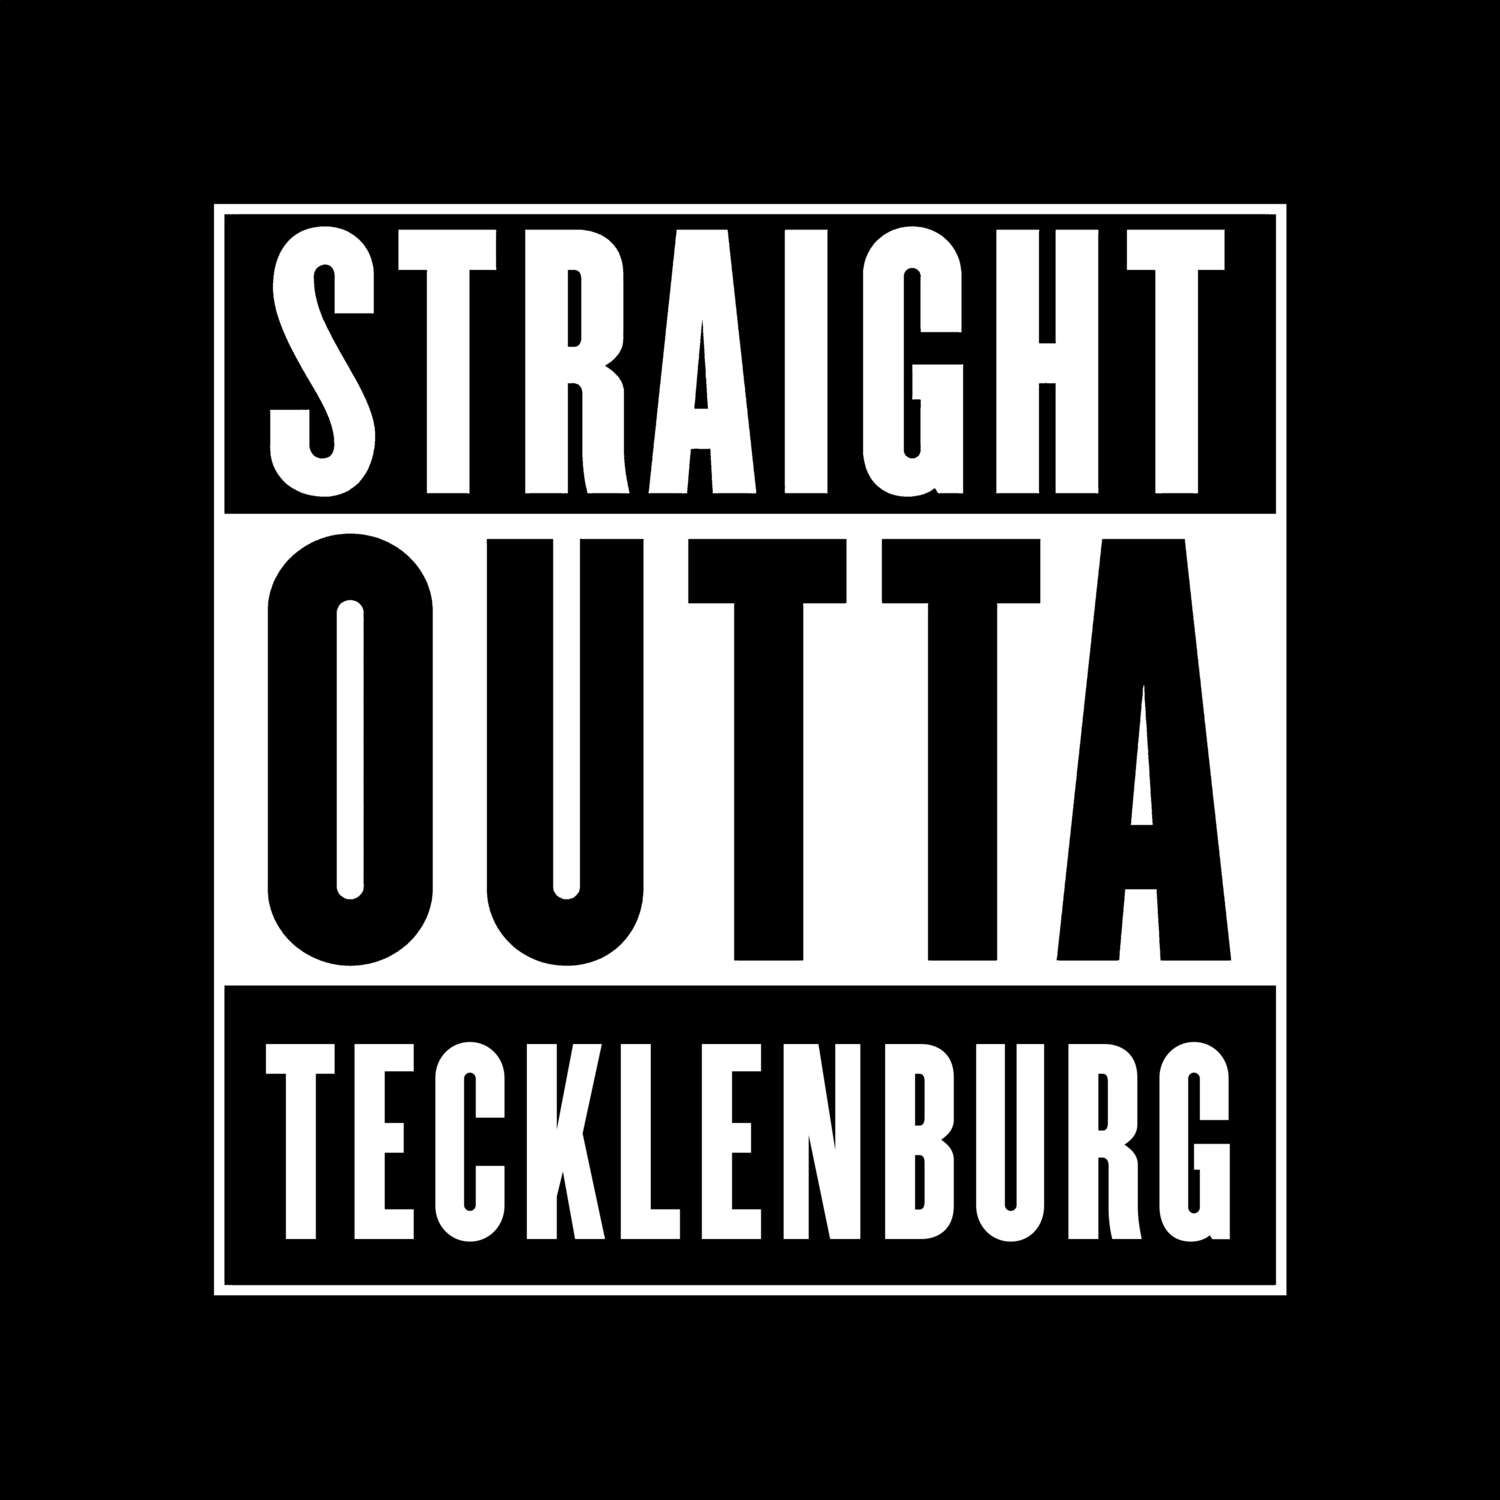 Tecklenburg T-Shirt »Straight Outta«